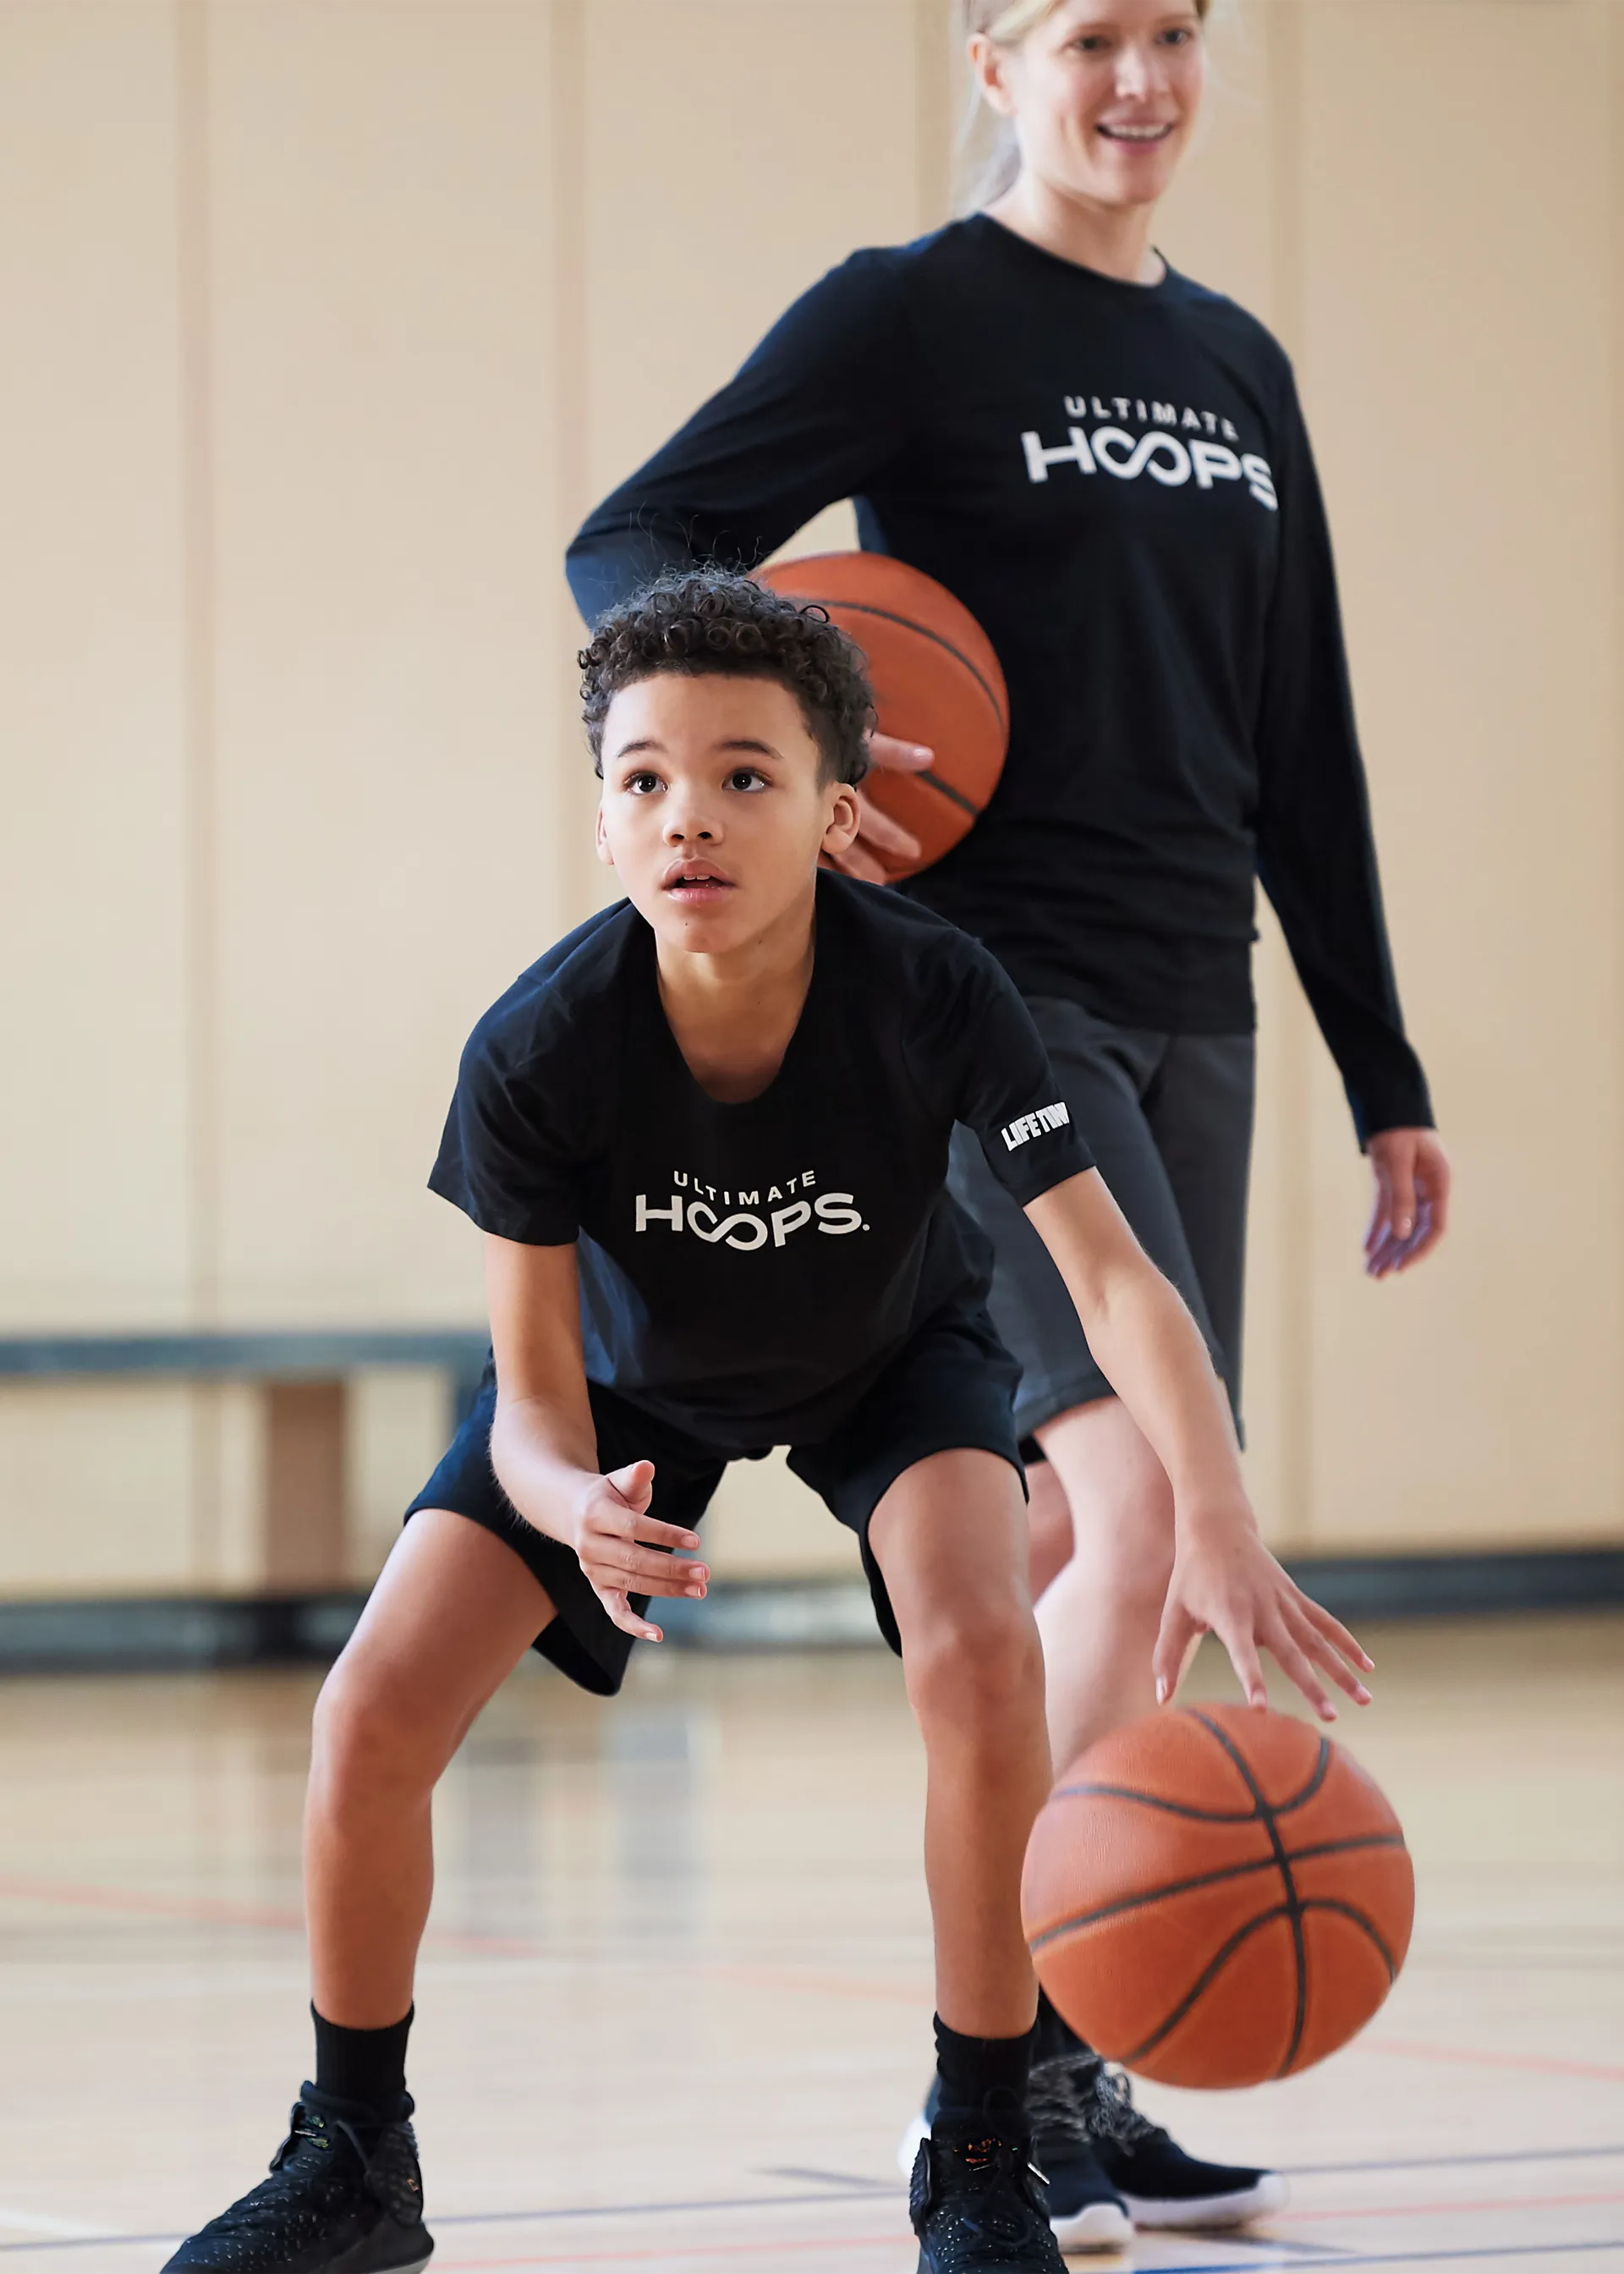 Two young basketball players wearing Life Time tee shirts playing basketball.